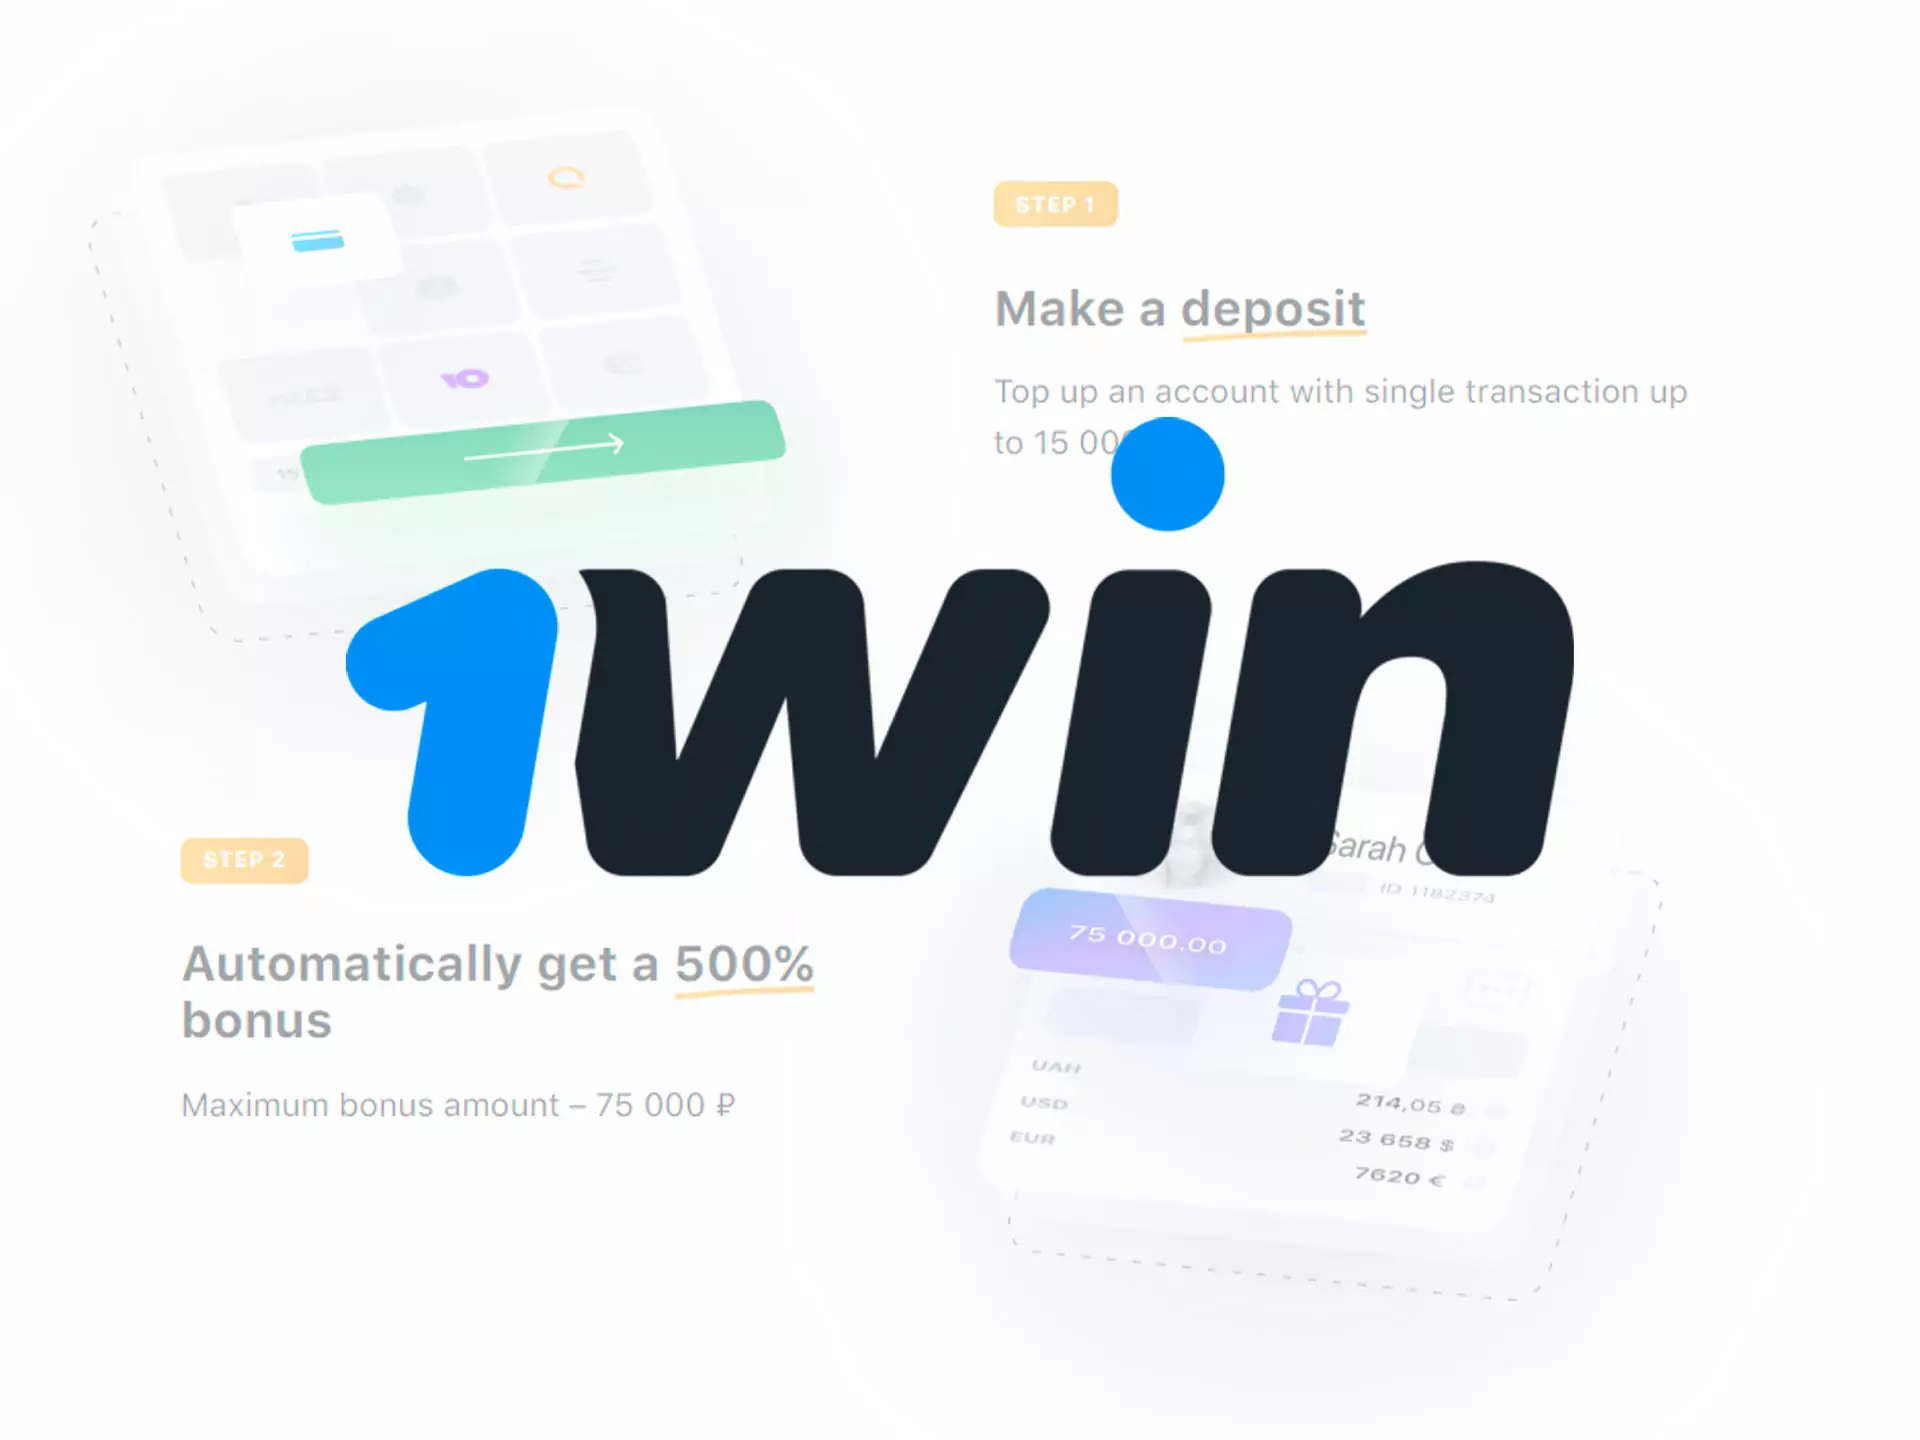 1win is modern betting website with plenty of deposit and winthdrawal methods.